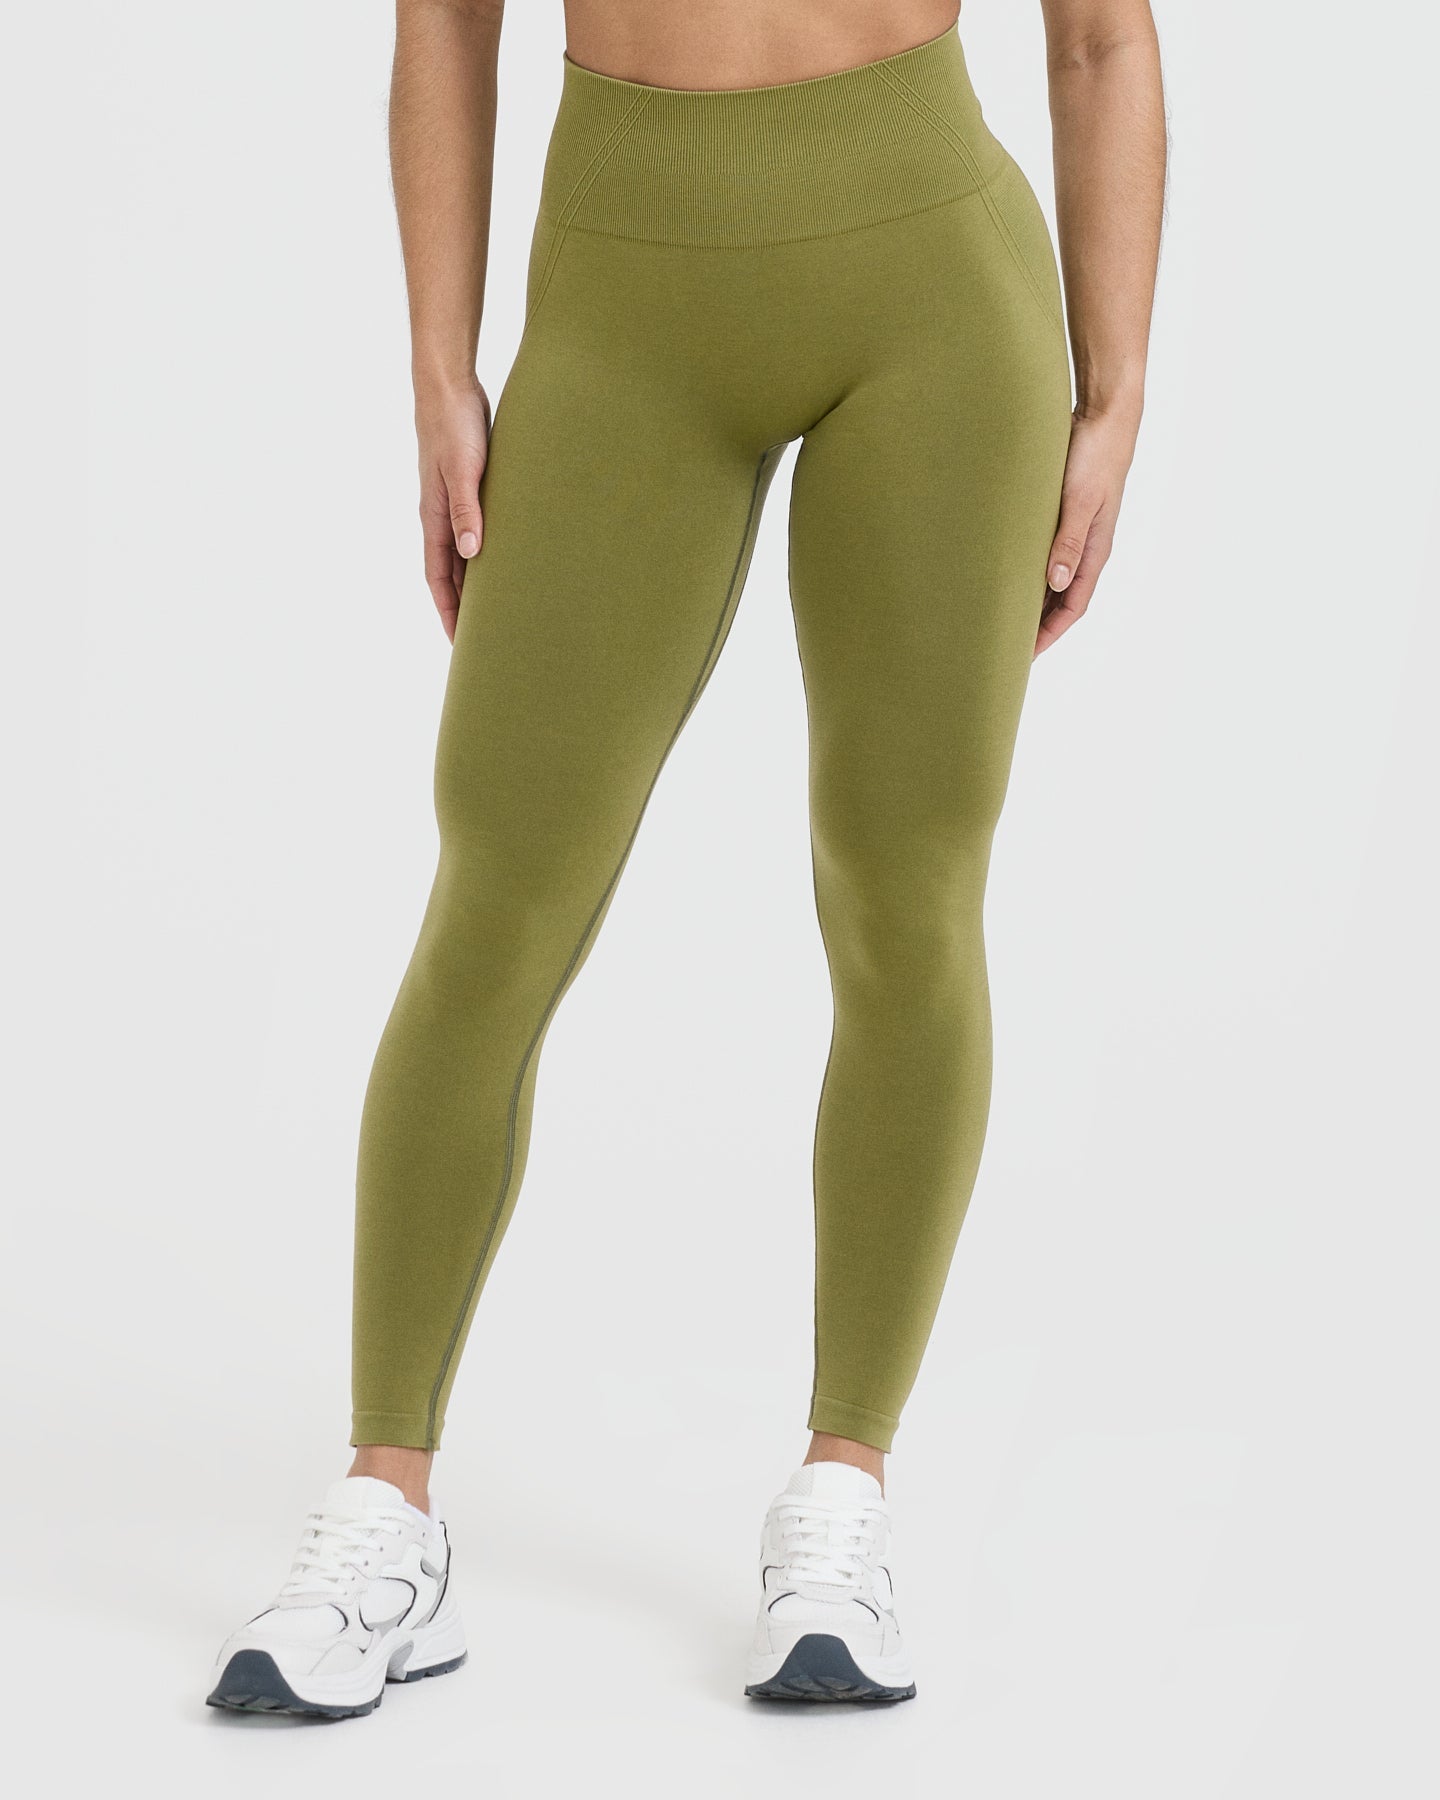 Women's leggings Noxon - CYPRESS MELANGE Green - H21